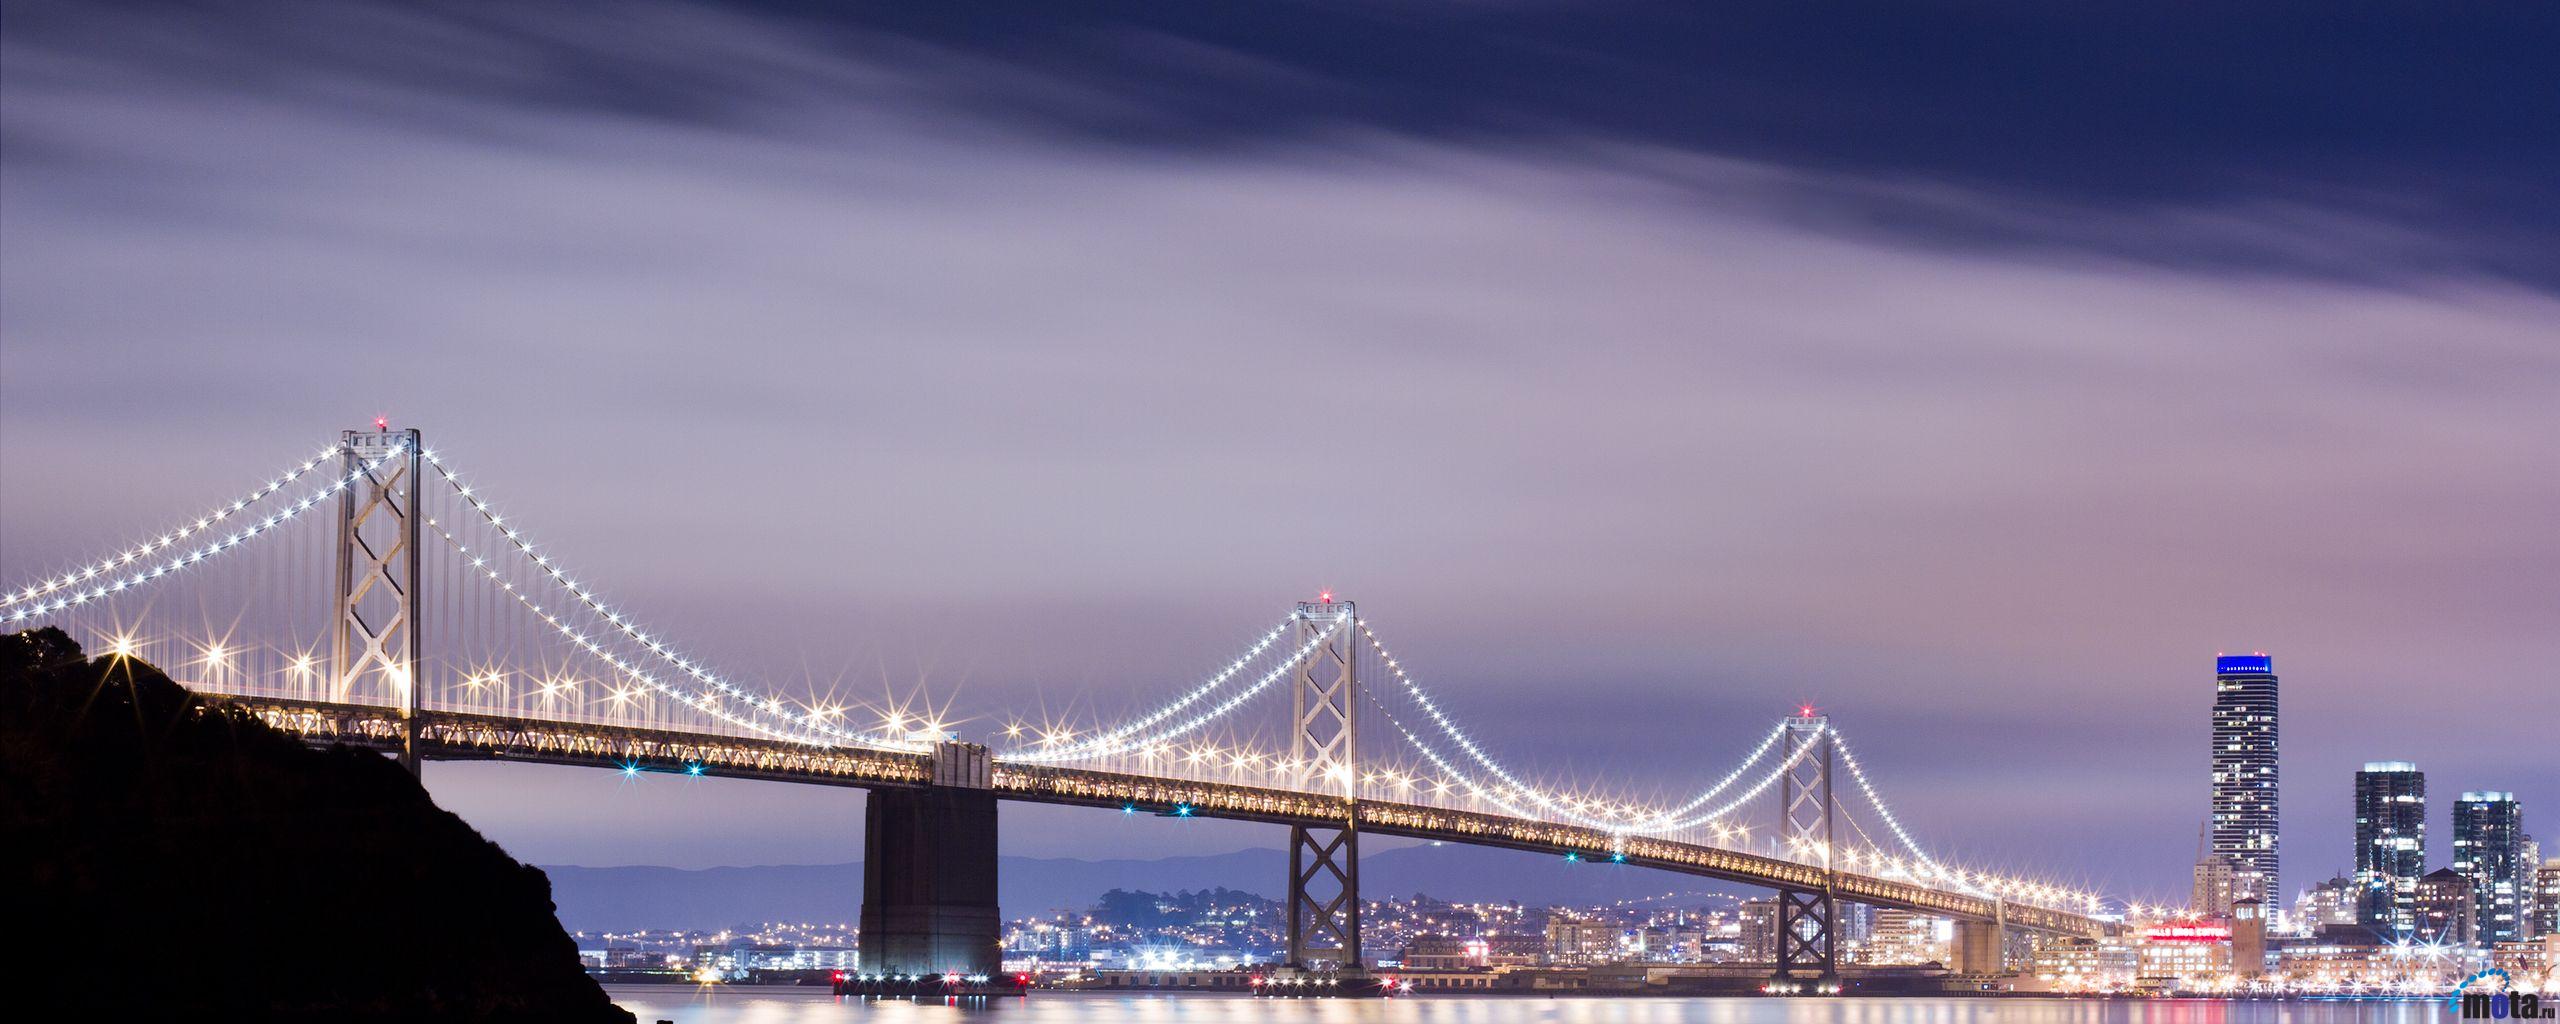 Download Wallpaper San Francisco Oakland Bay Bridge 2560 x 1024